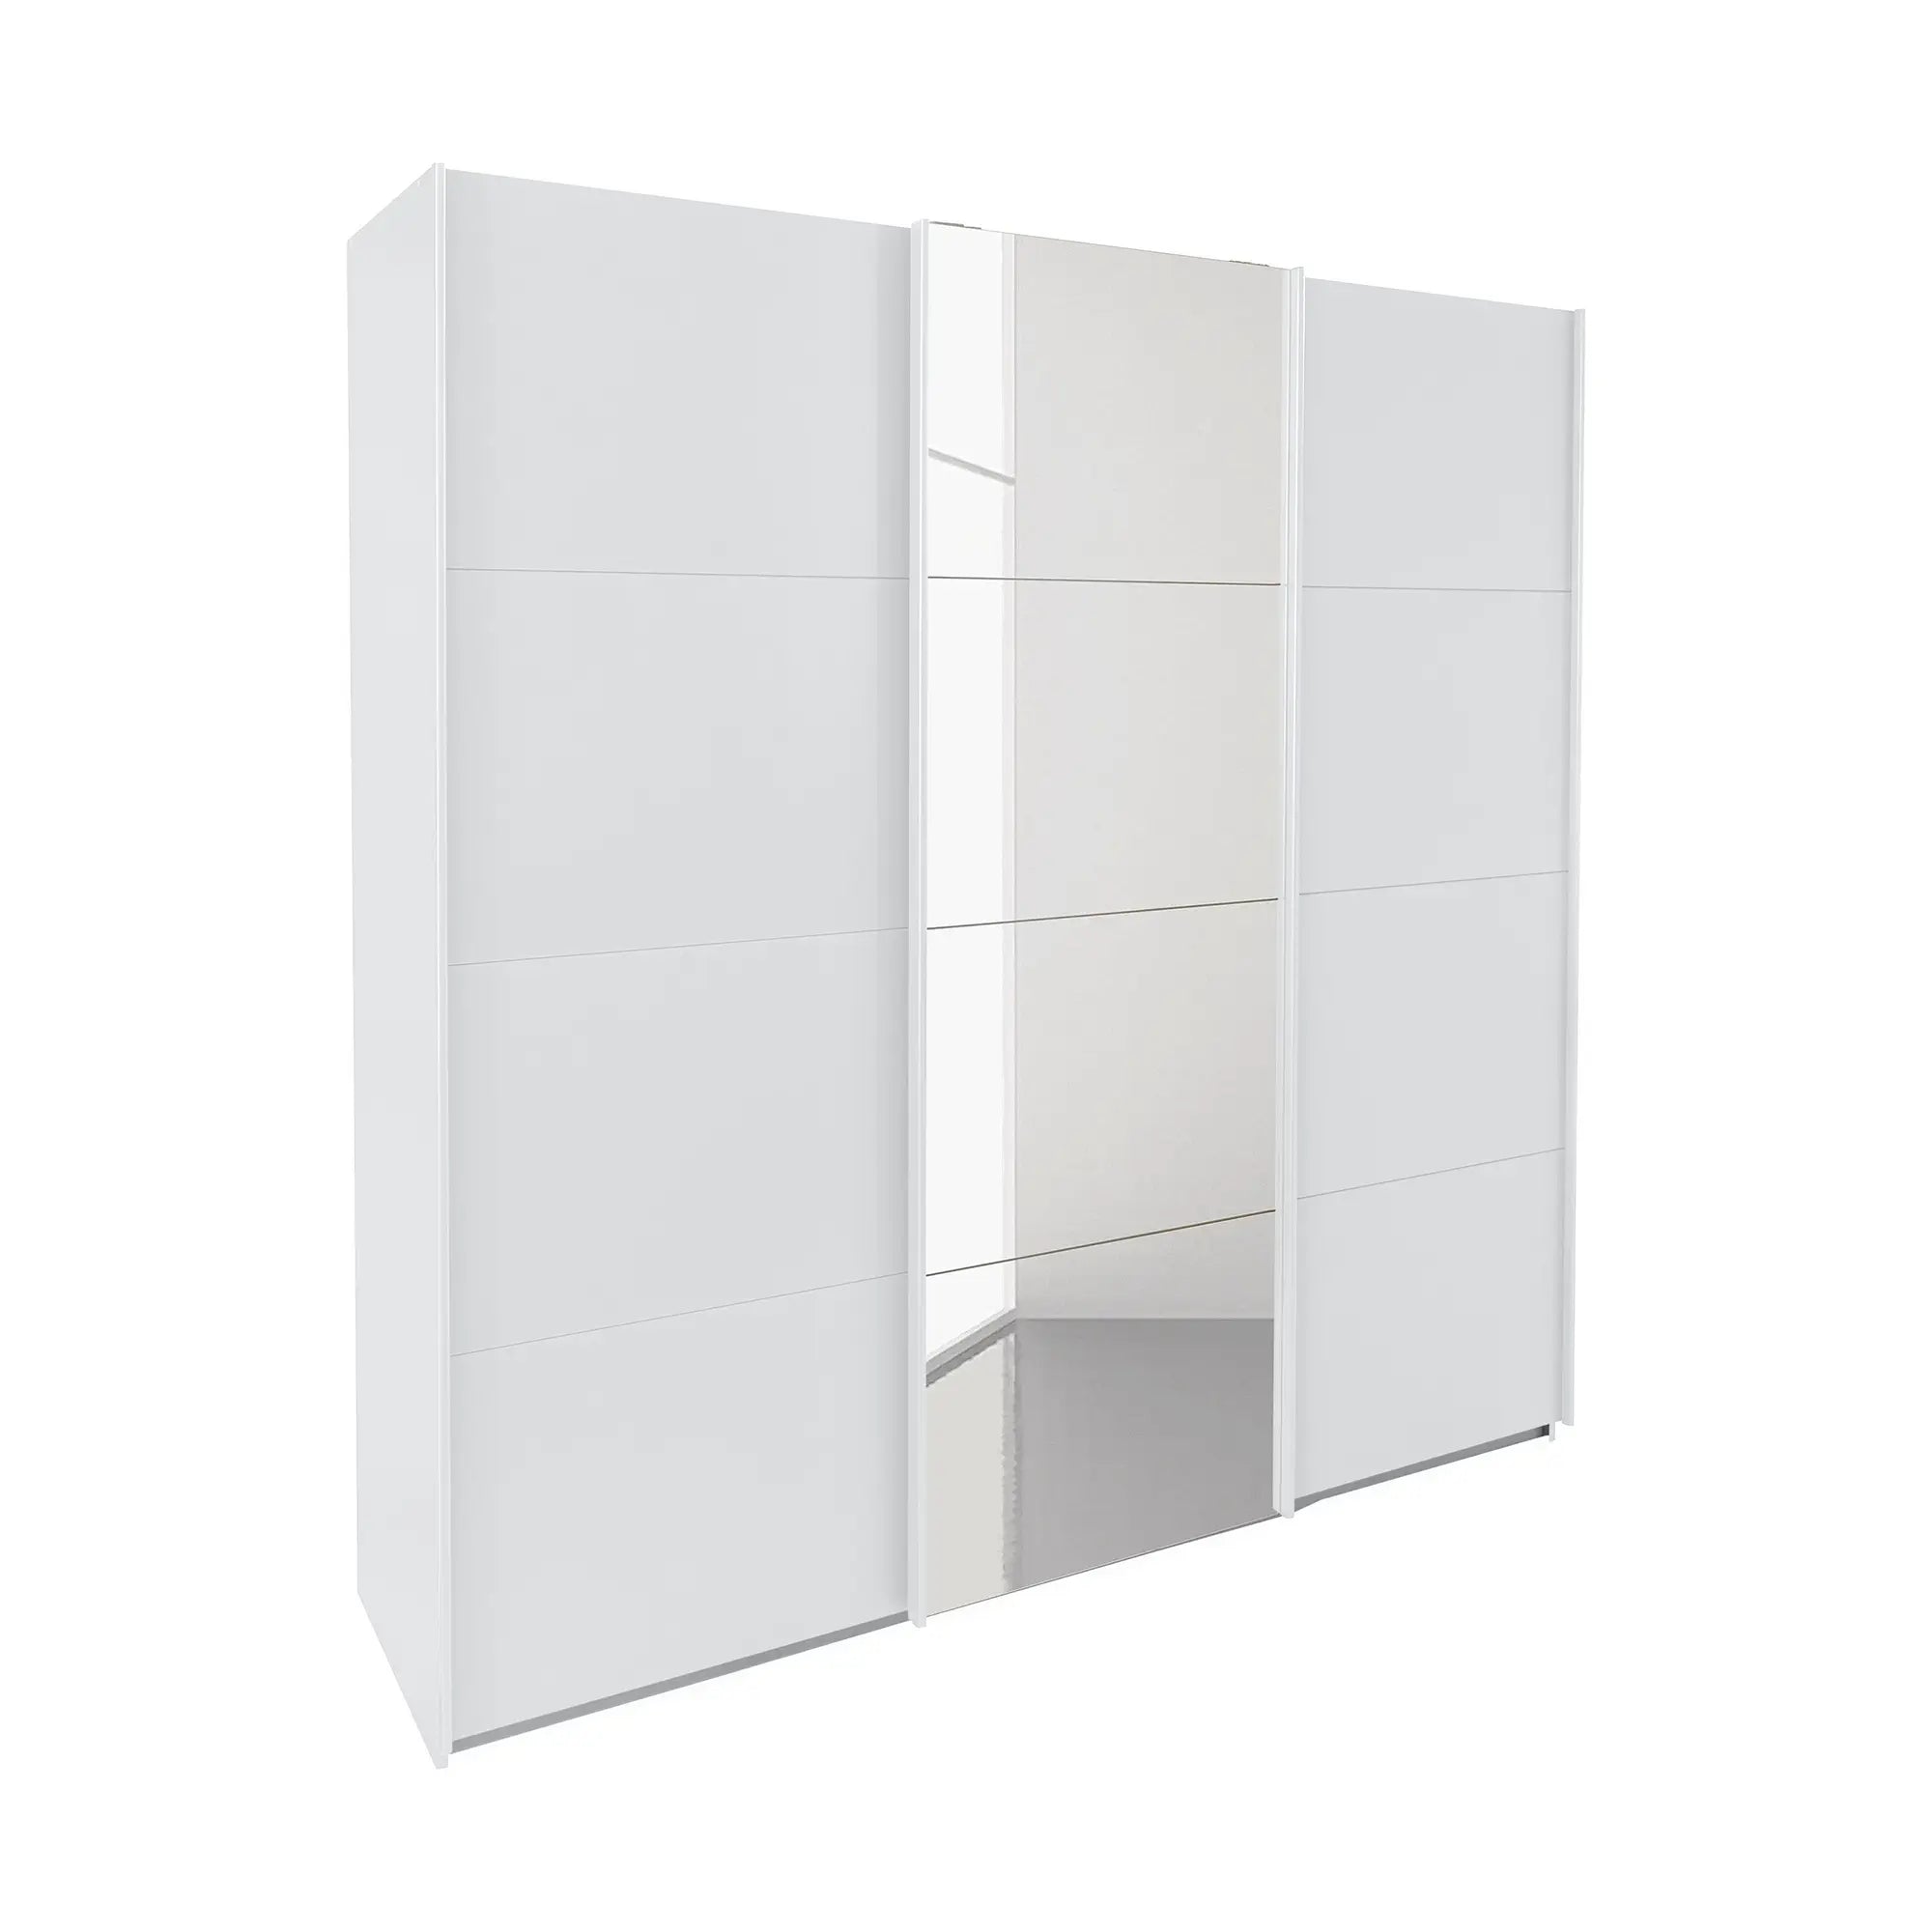 Rauch Forms White 3 Door Sliding Wardrobe with Mirror